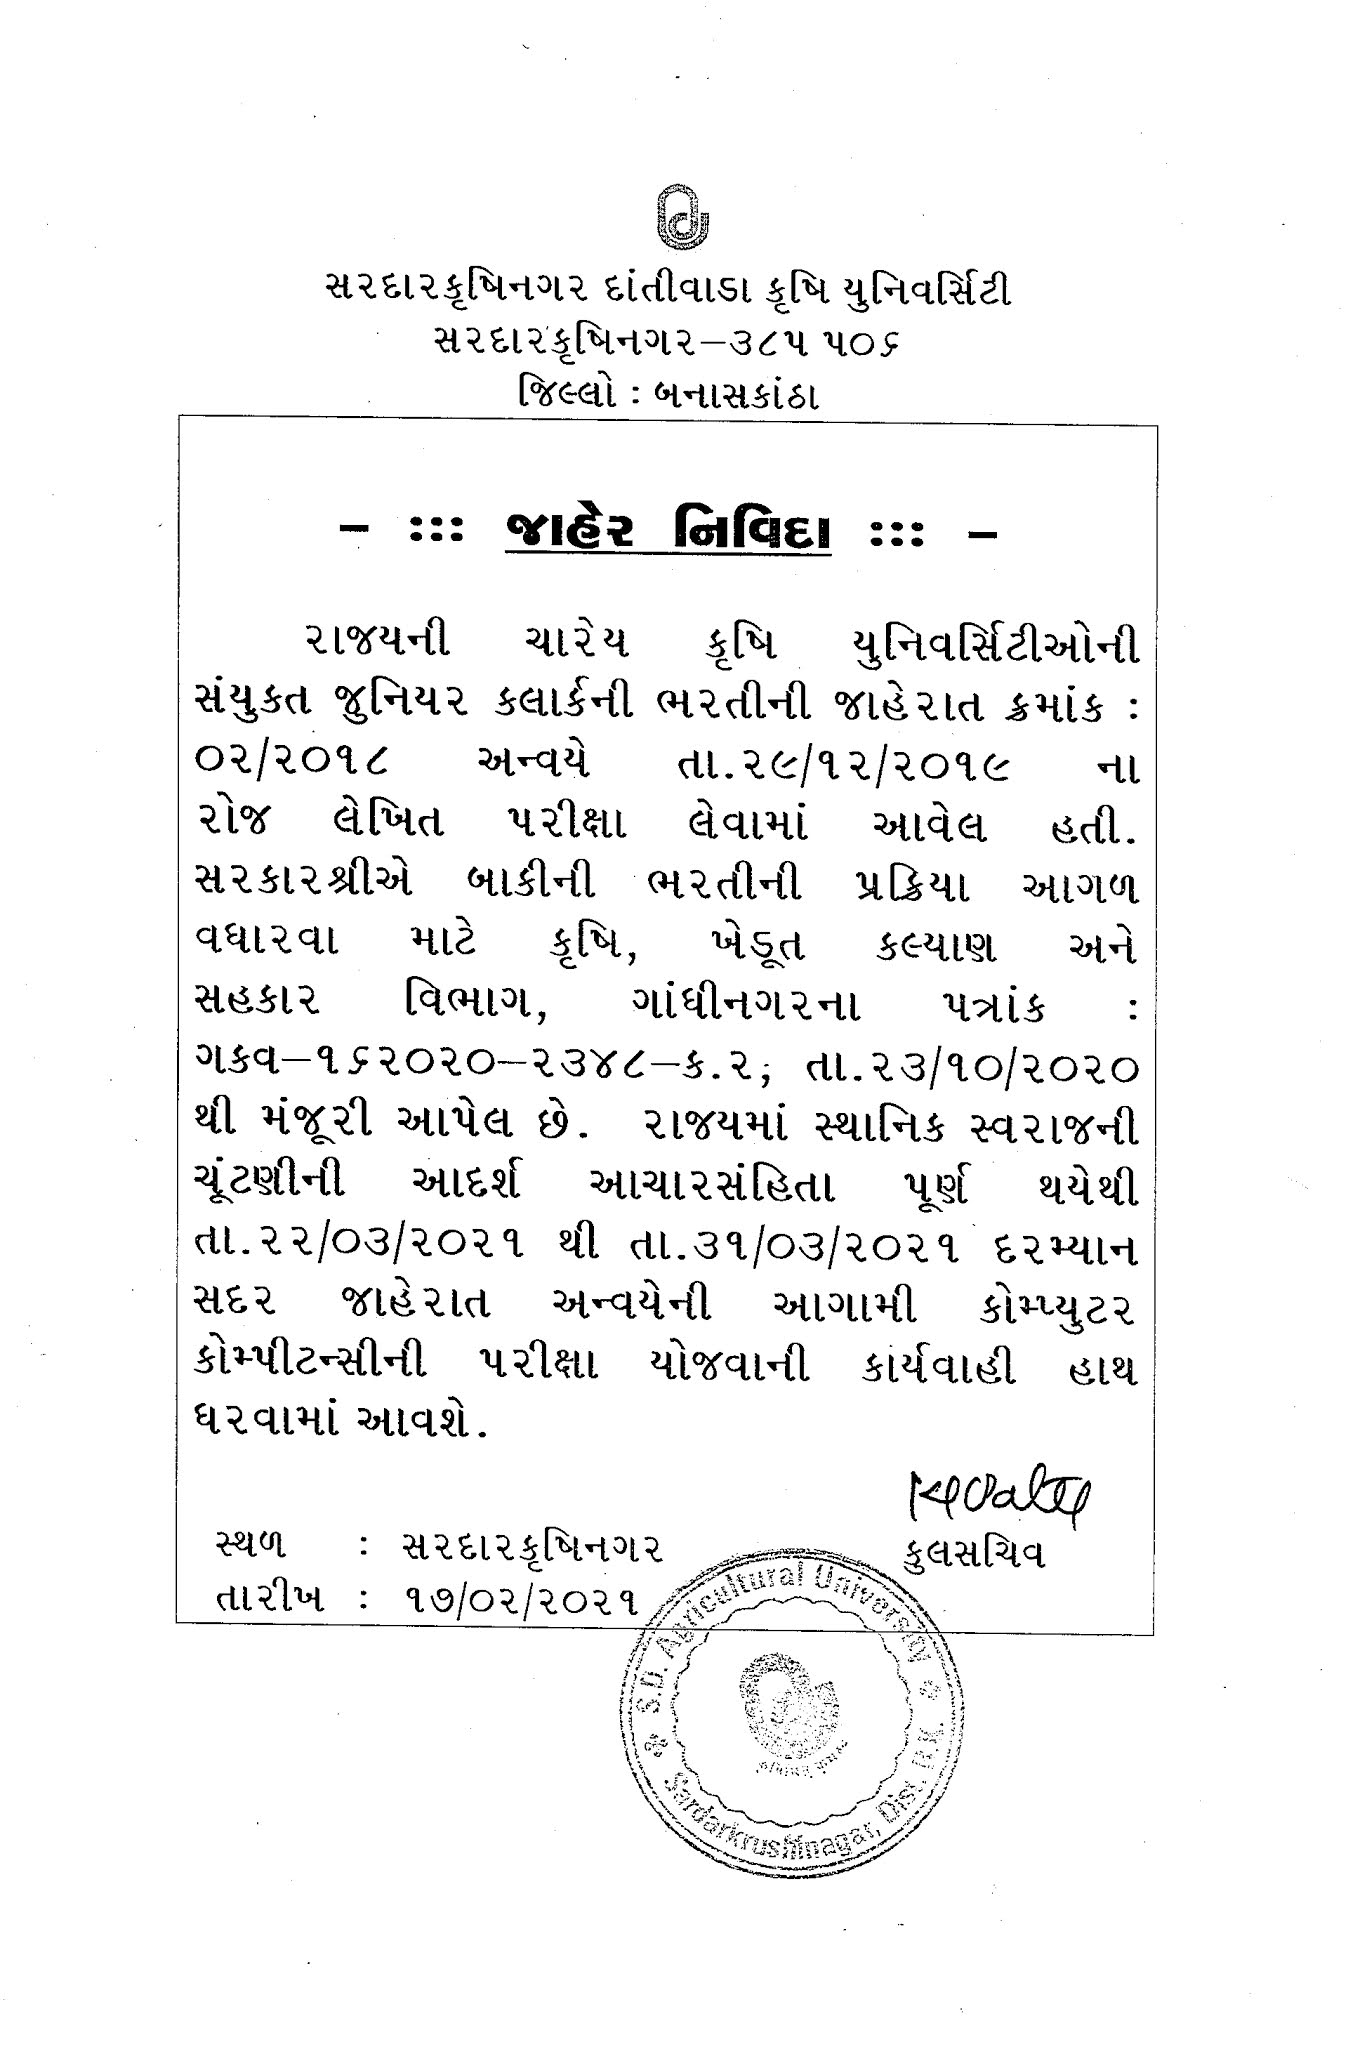 Gujarat Agricultural University 257 Clerk Recruitment Computer Test Declared